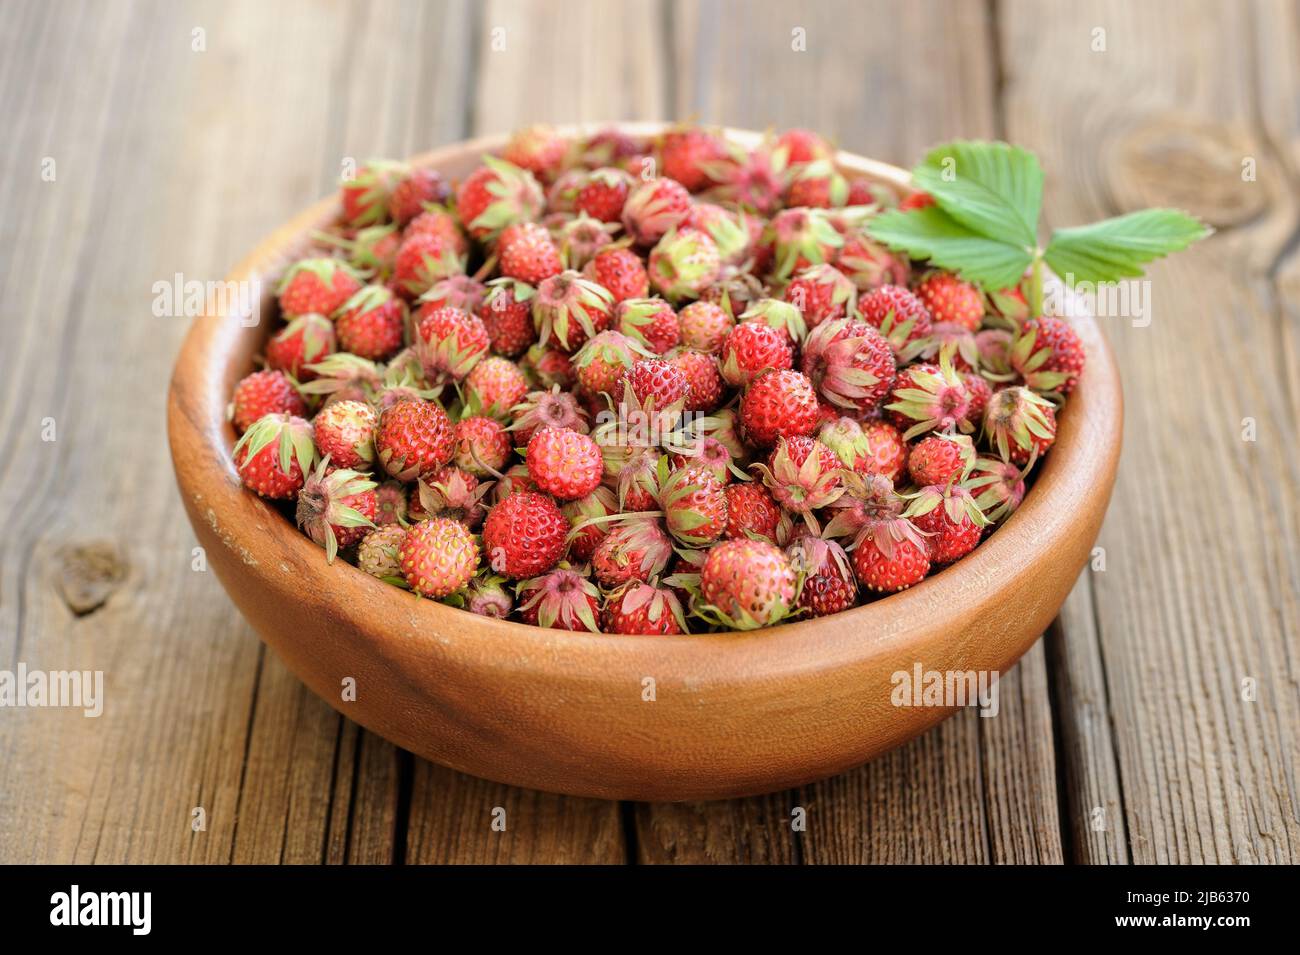 Wild strawberries Fragaria viridis with green leaf in wooden bowl horizontal Stock Photo